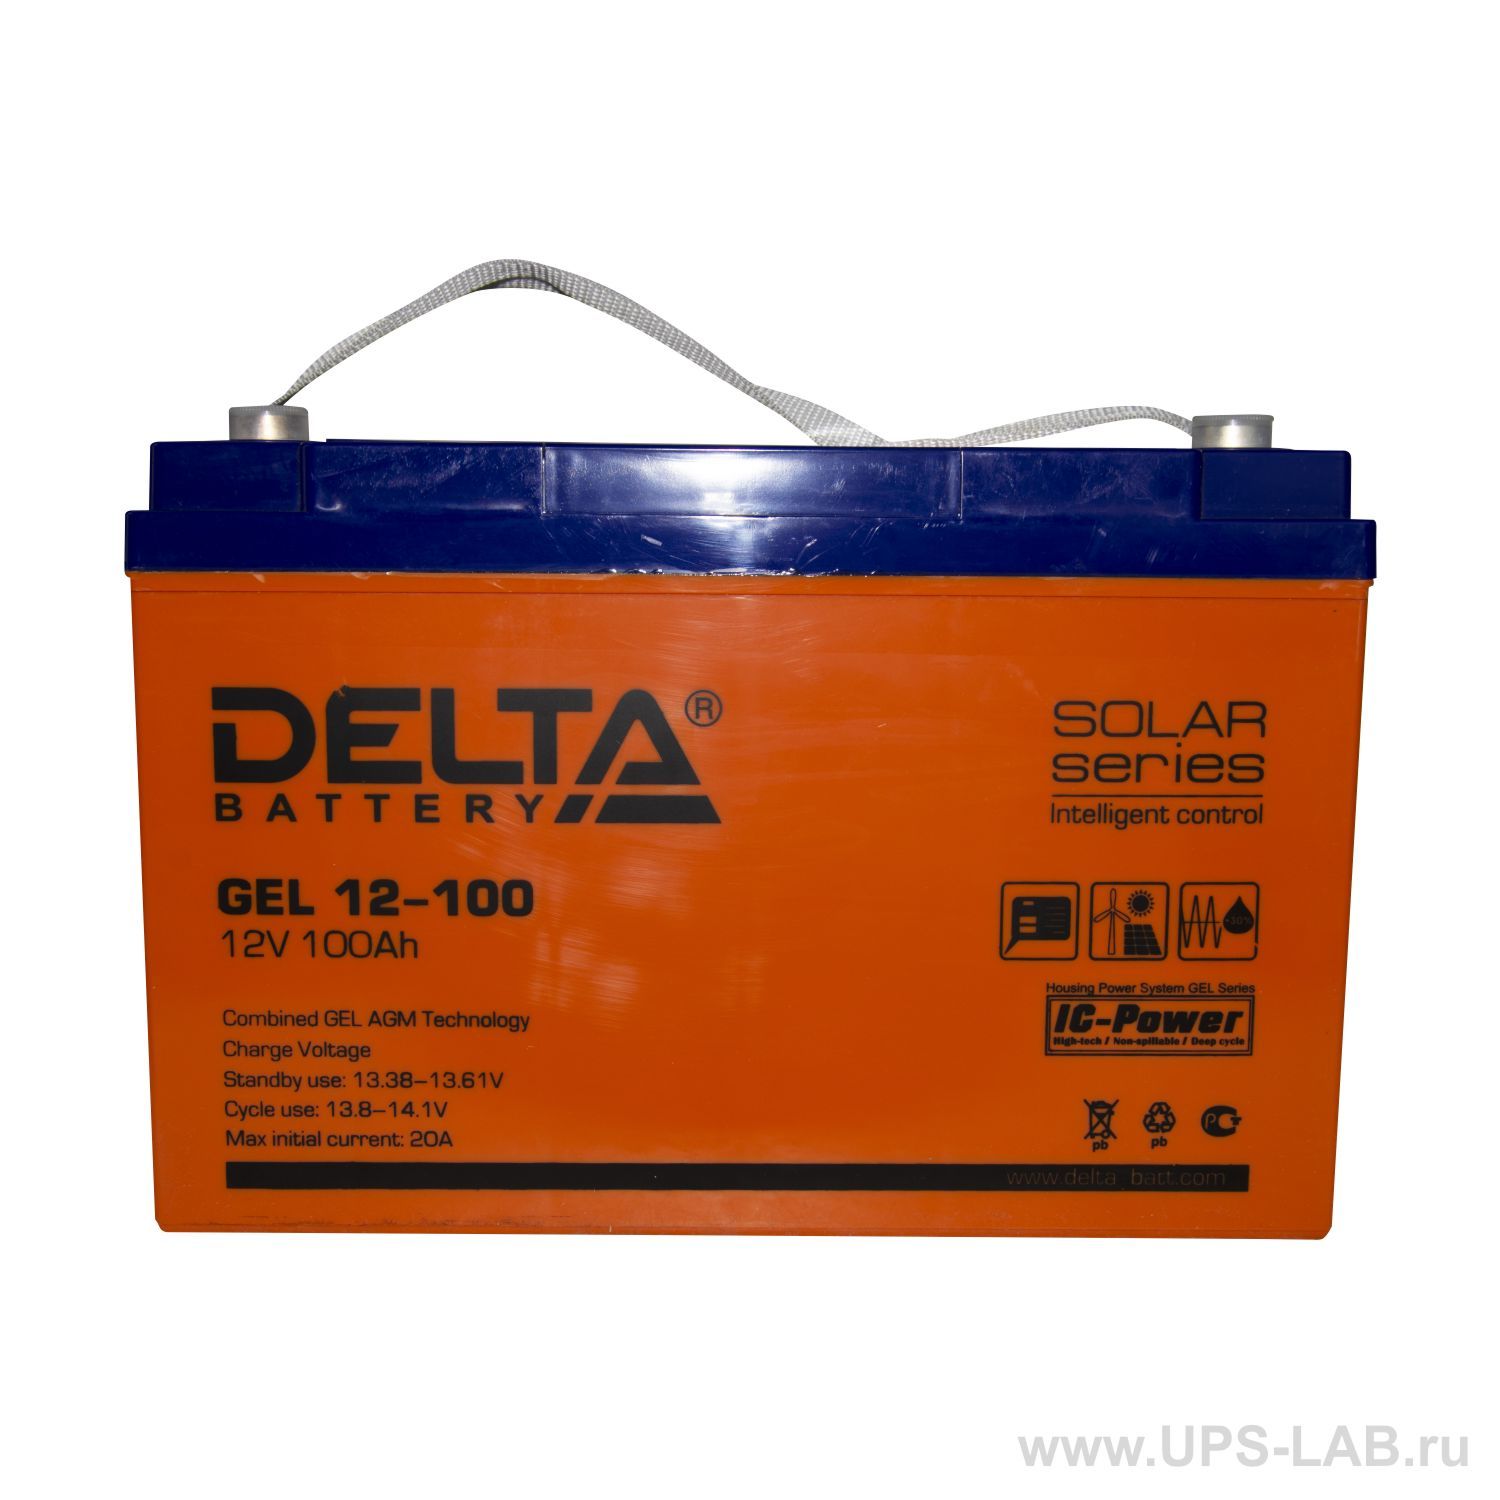 Аккумулятор Delta Gel 12-100. Аккумулятор 100ач Delta. Аккумулятор Delta gel12100 12v 100ah (AGM+Gel, ups/Solar Series) (333*173*222mm). Delta Battery Gel 12-100 12в 100 а·ч.